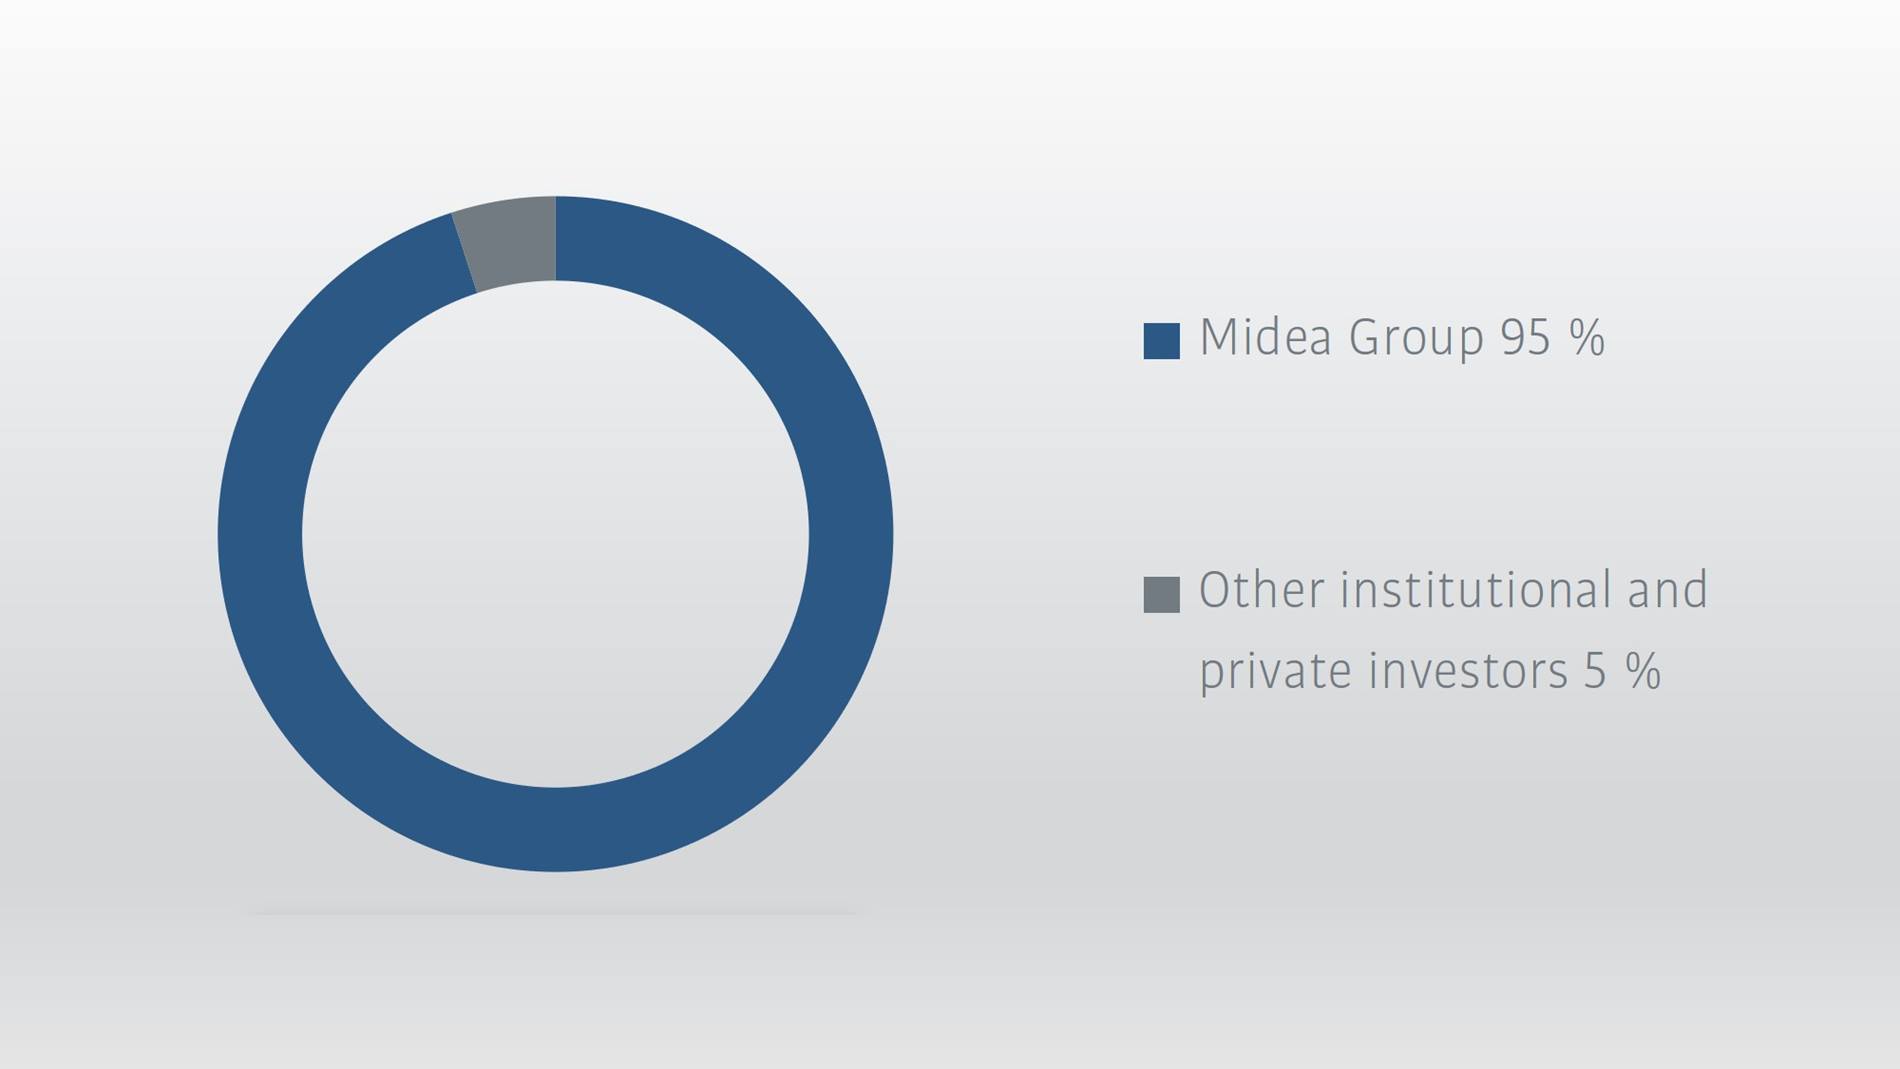 KUKA shareholder structure as pie chart